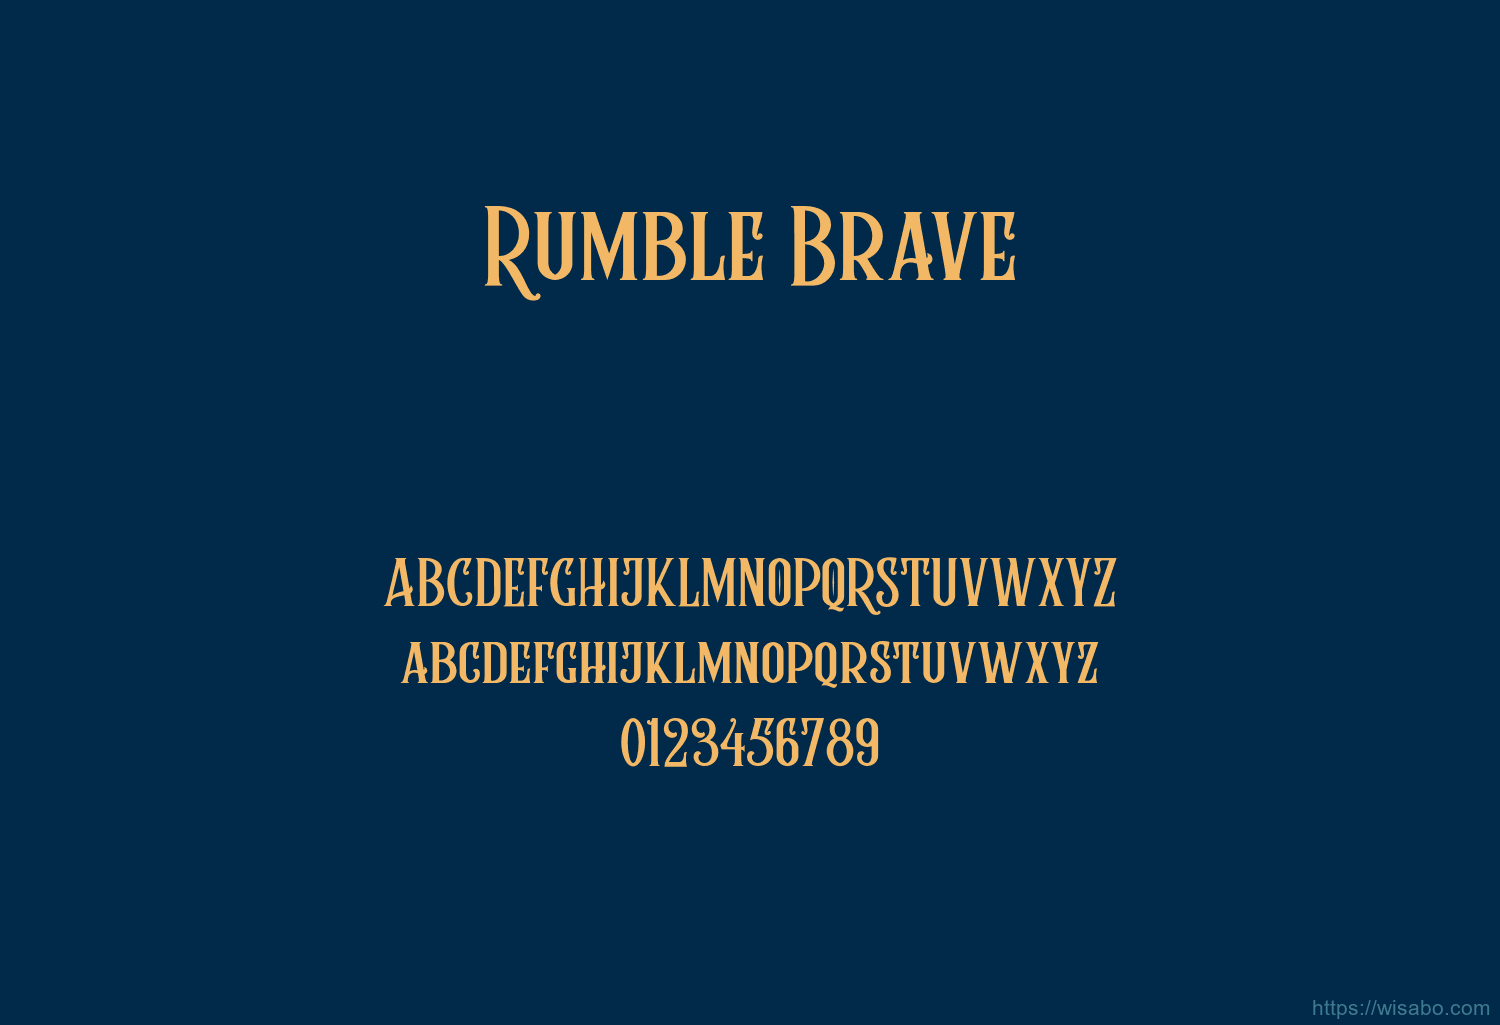 Rumble Brave